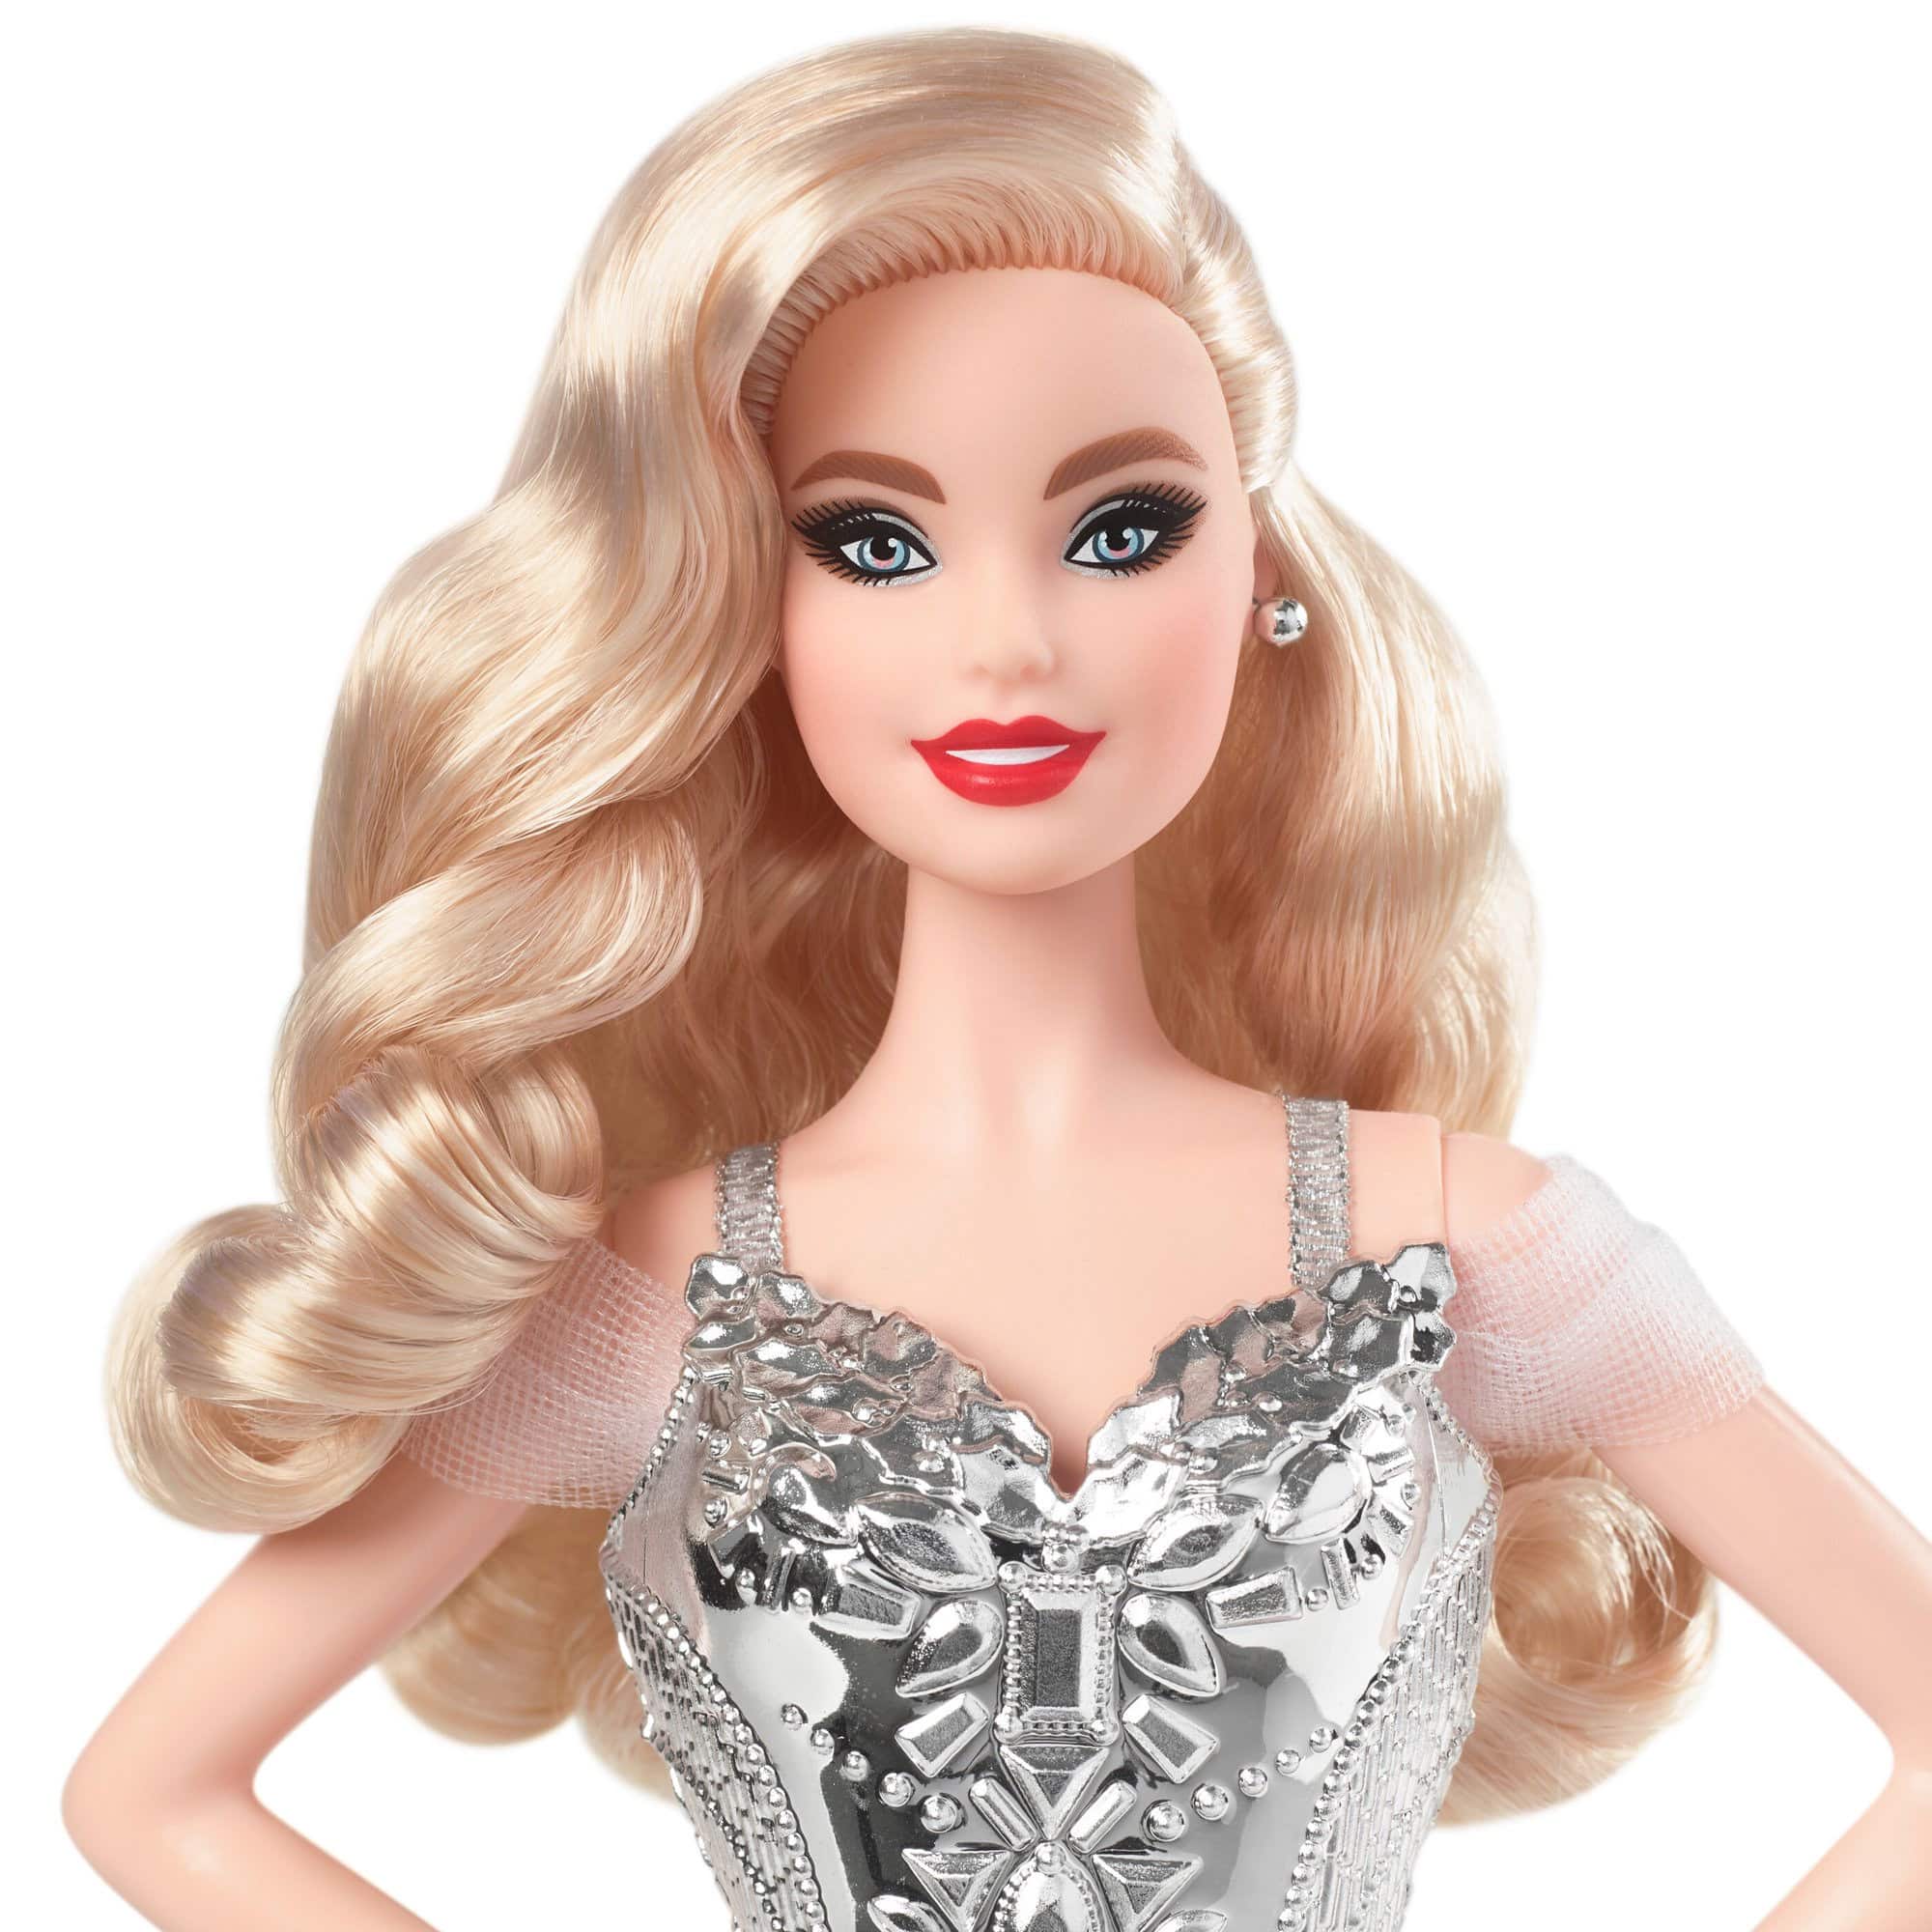 Barbie - 2021 Holiday Barbie Doll